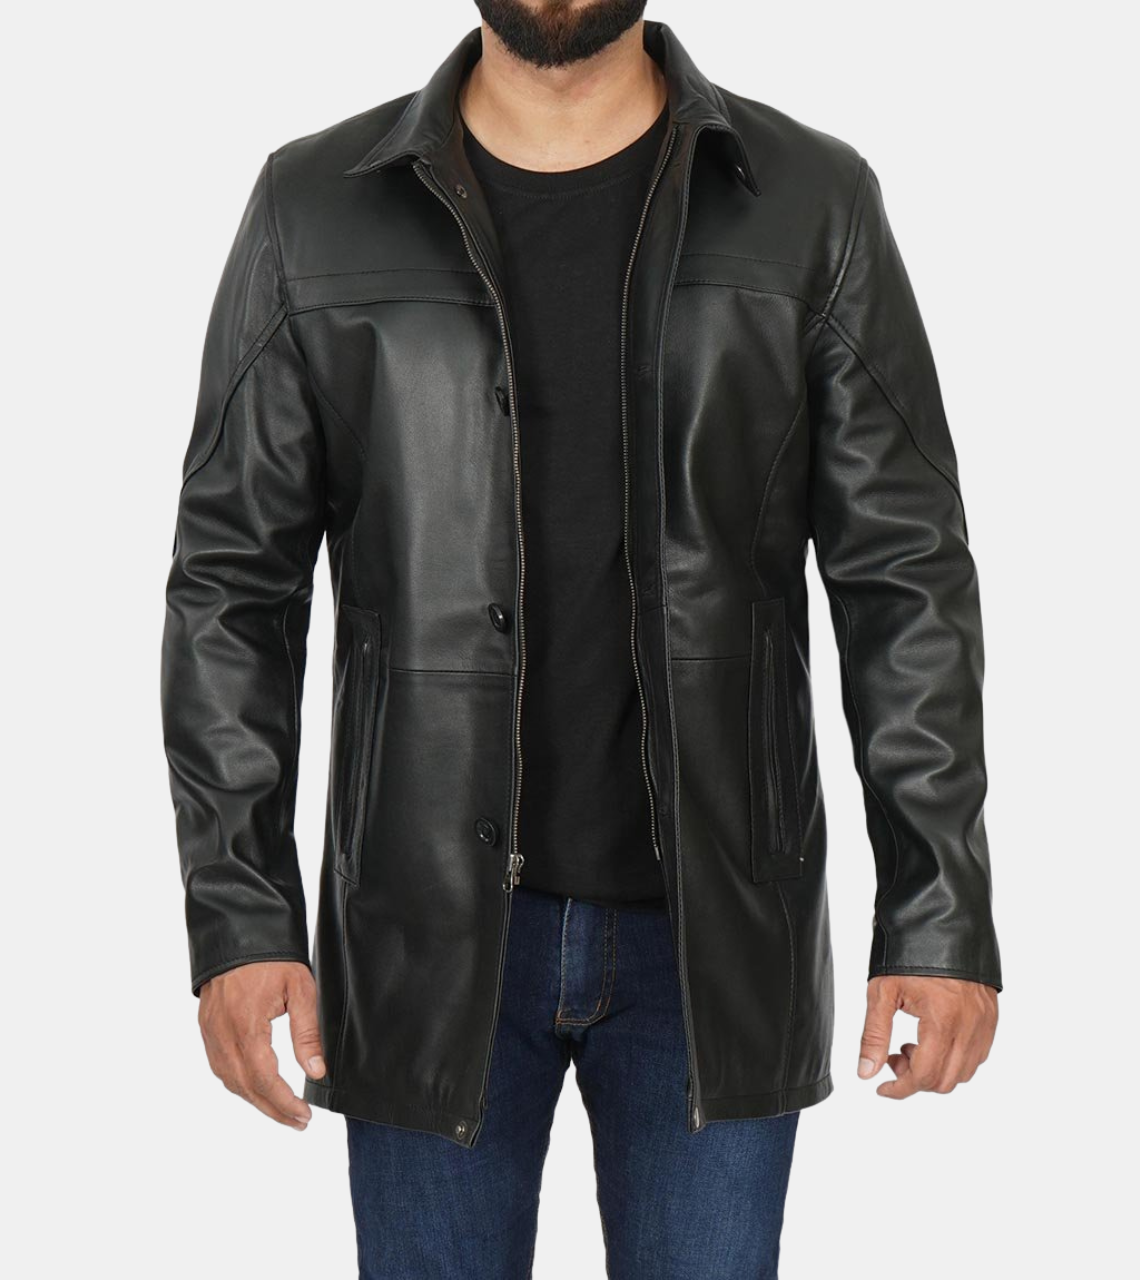 Corbin Black Waxed Leather Coat For Men's